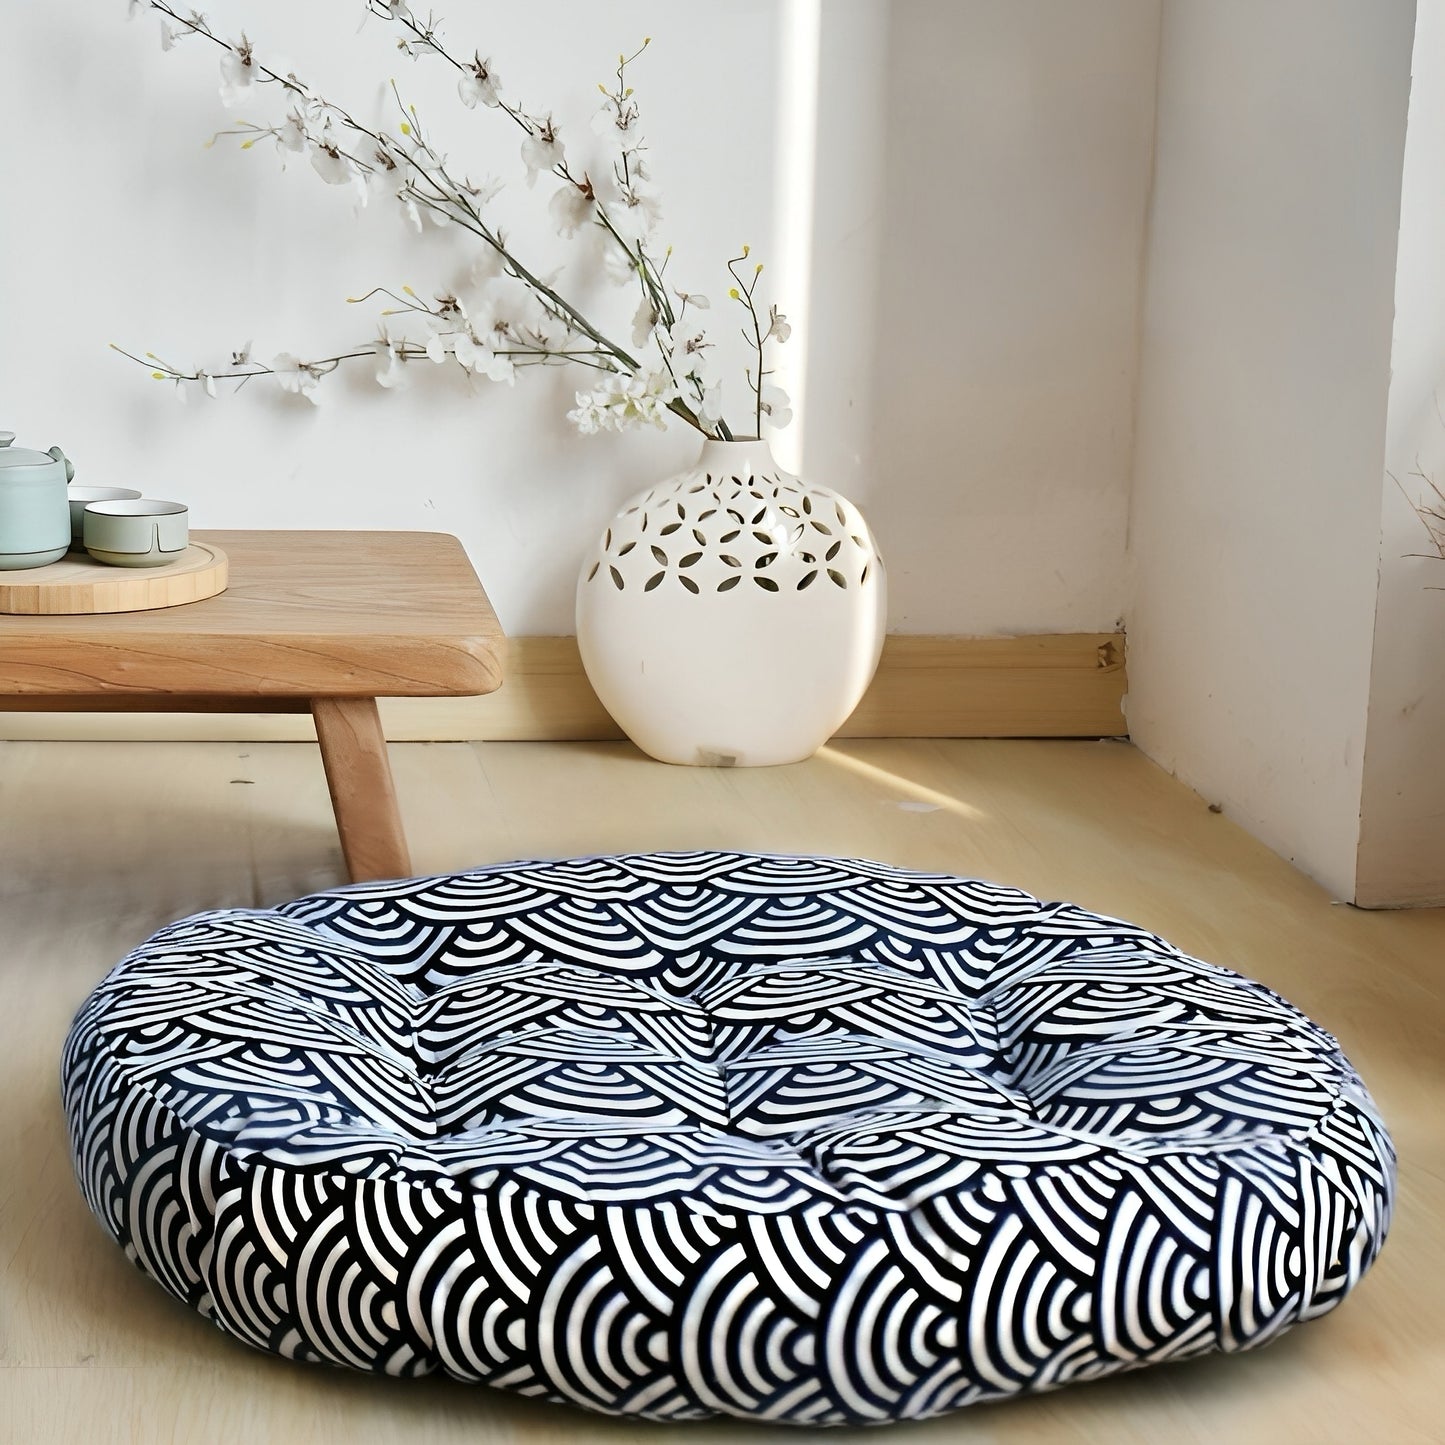 Japanese zen meditation cushion